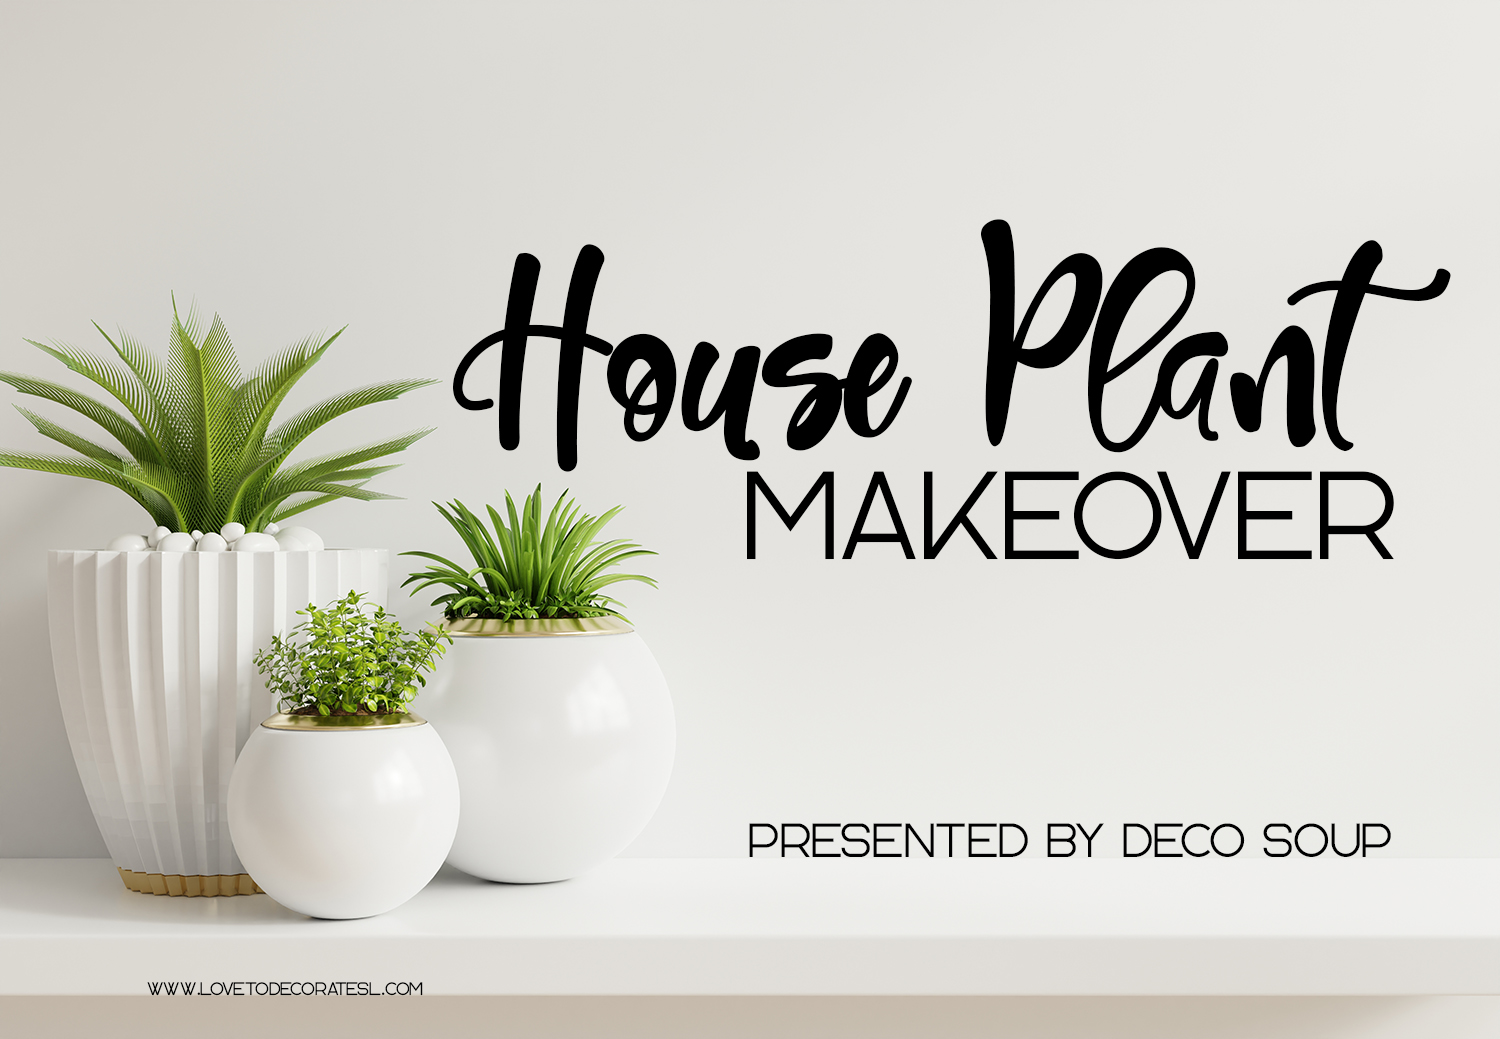 House Plant Makeover